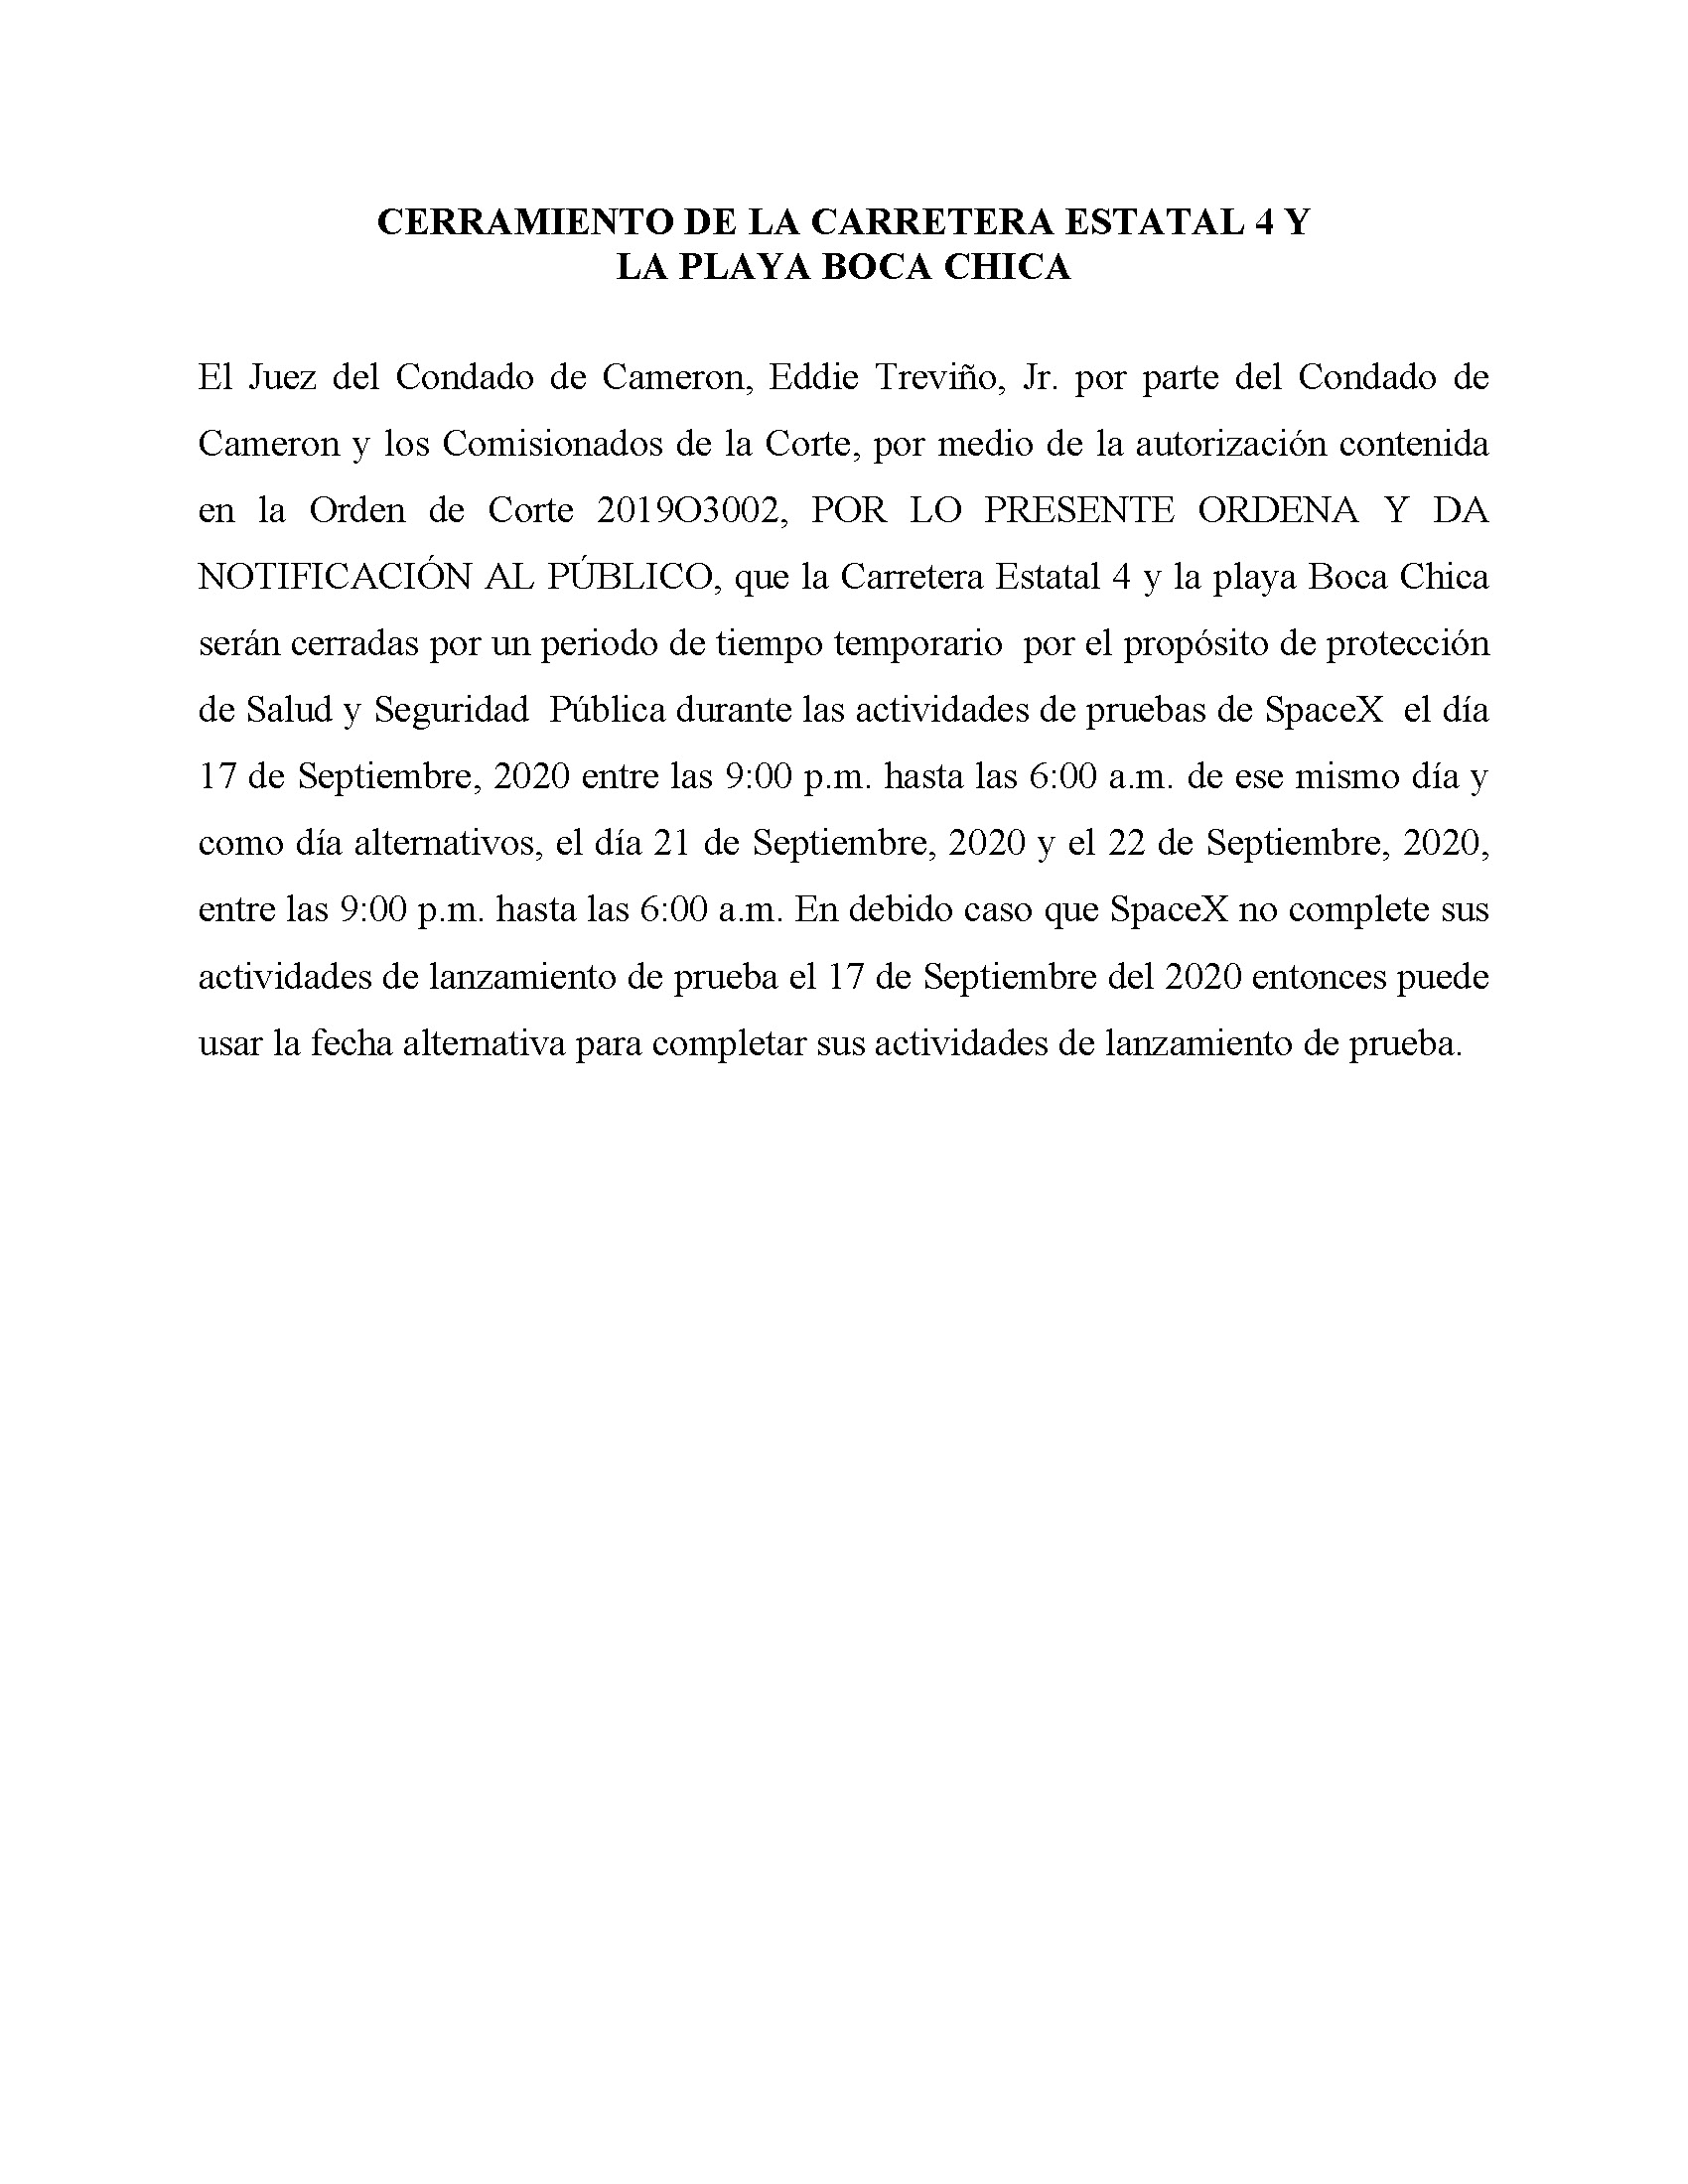 ORDER.CLOSURE OF HIGHWAY 4 Y LA PLAYA BOCA CHICA.SPANISH.9.17.20